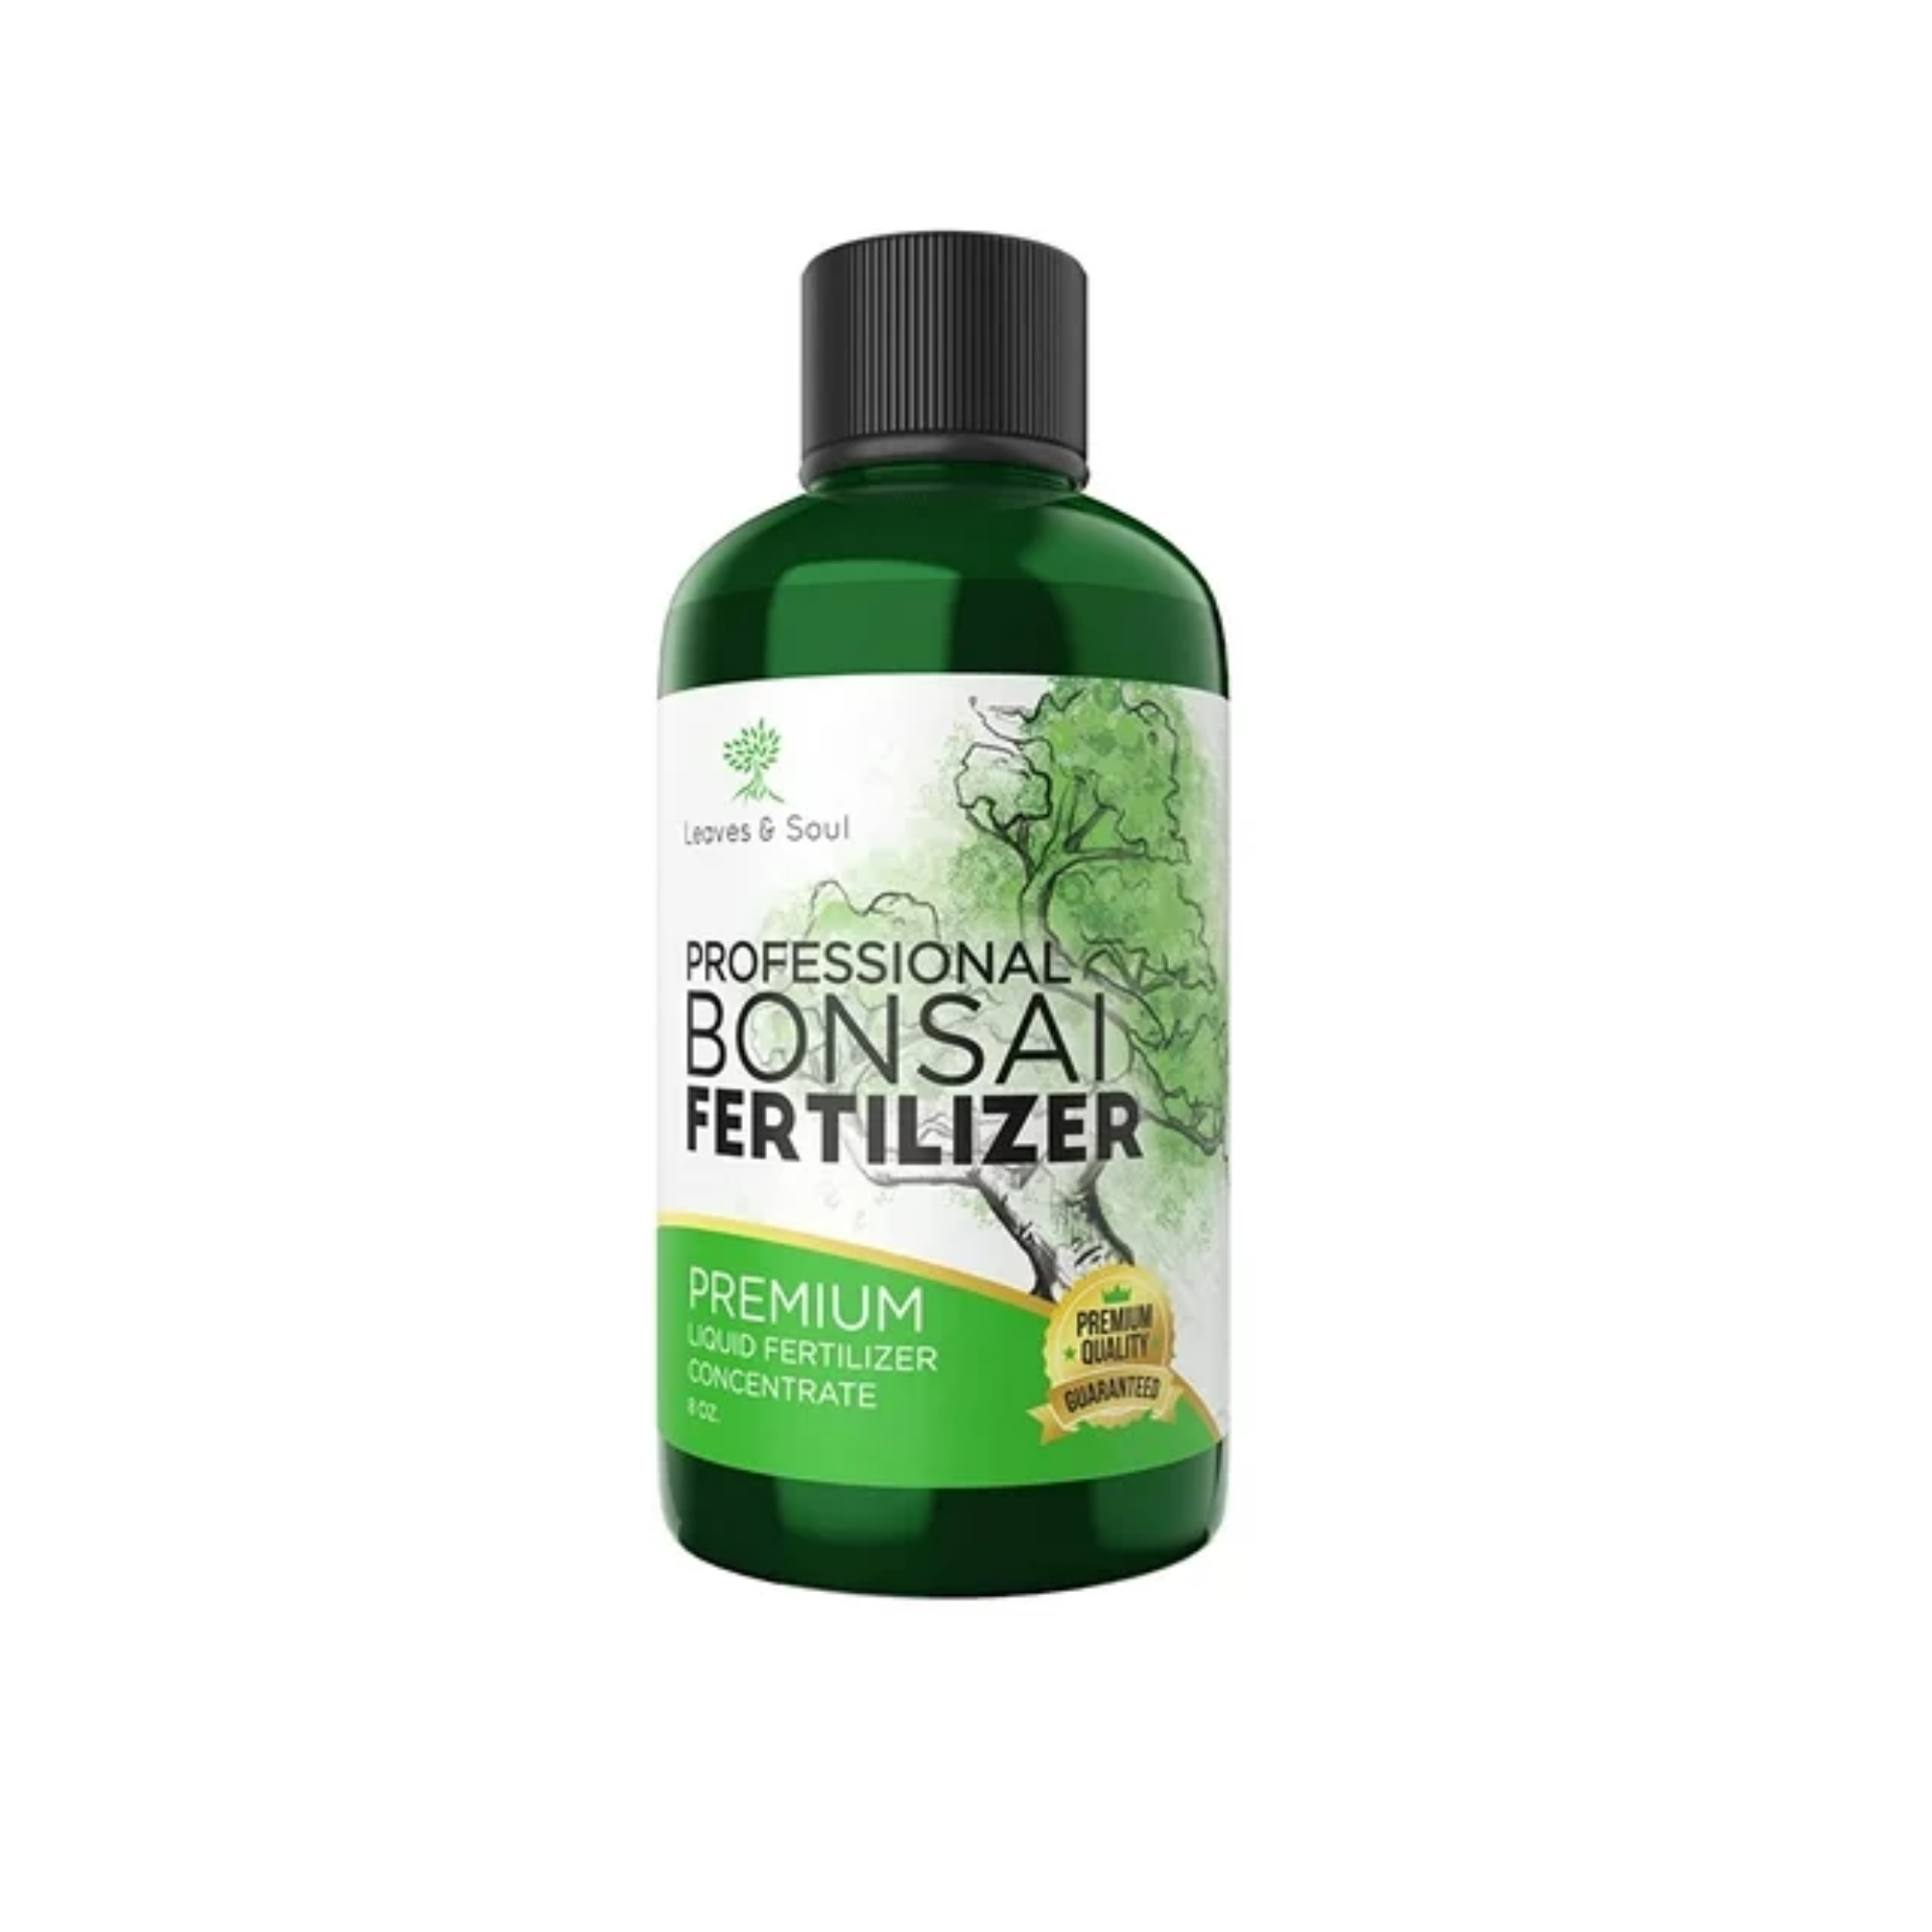 A bottle of bonsai fertilizer